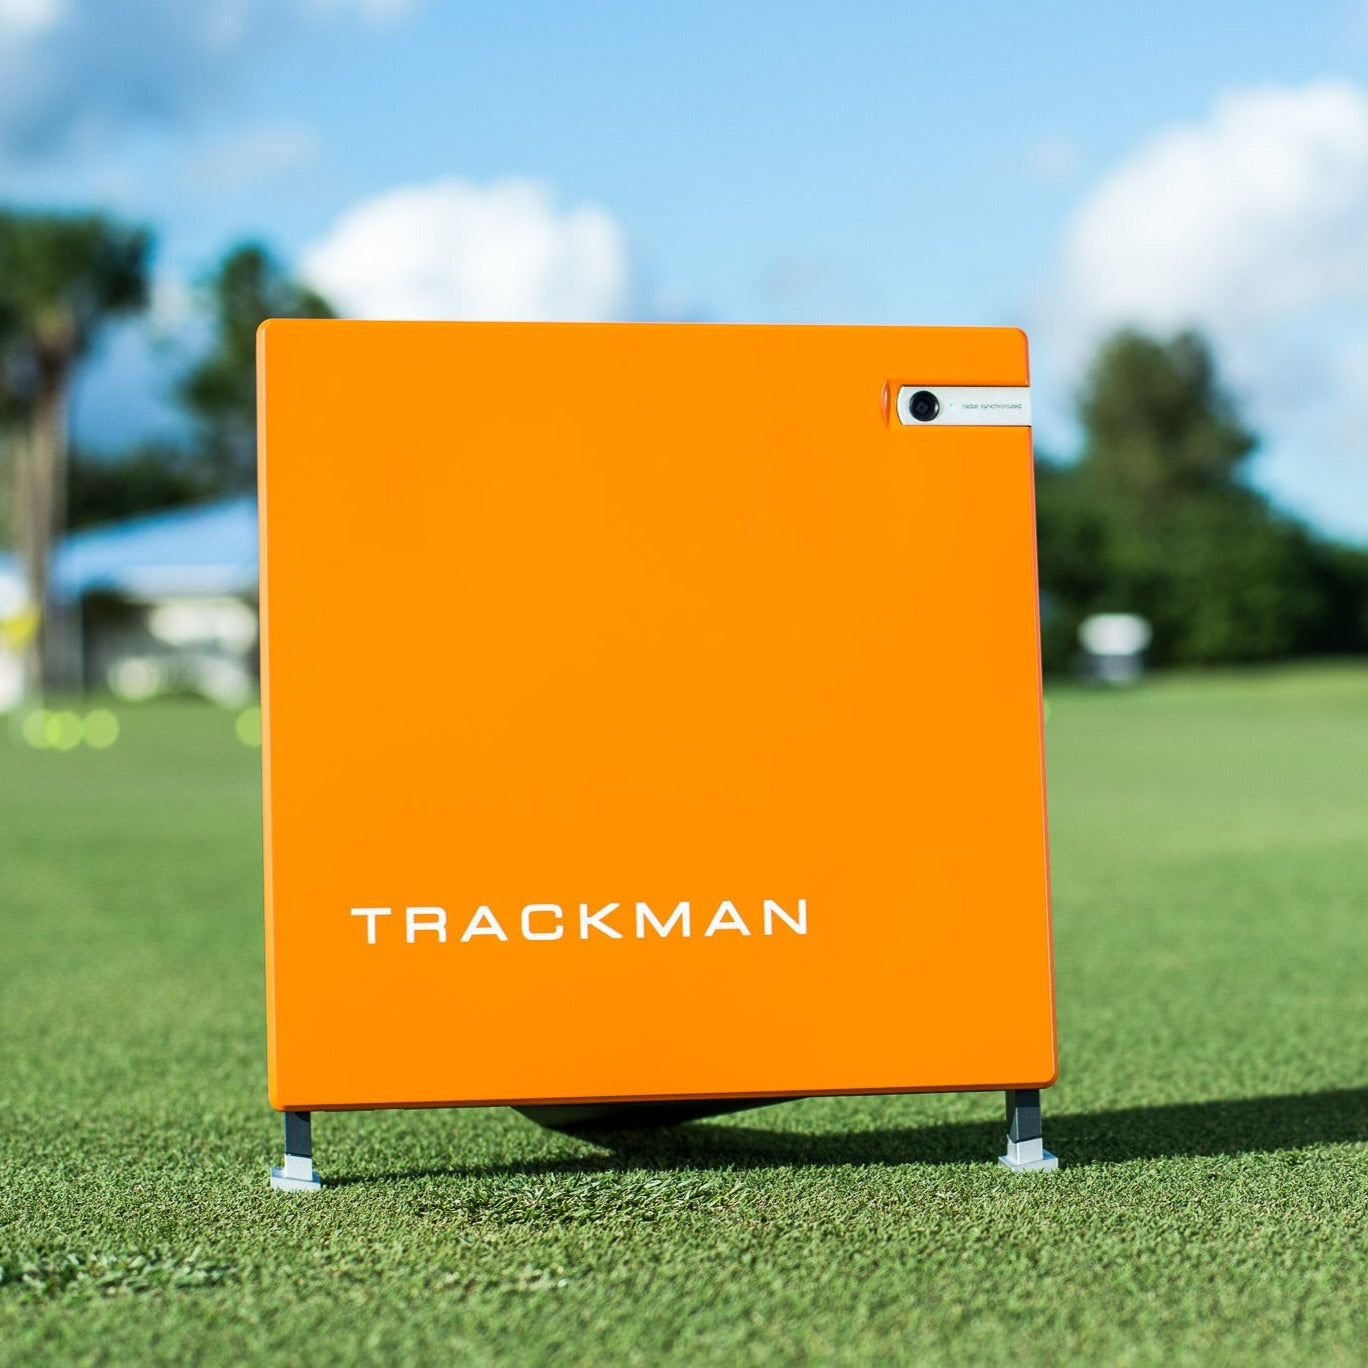 trackman 4 price